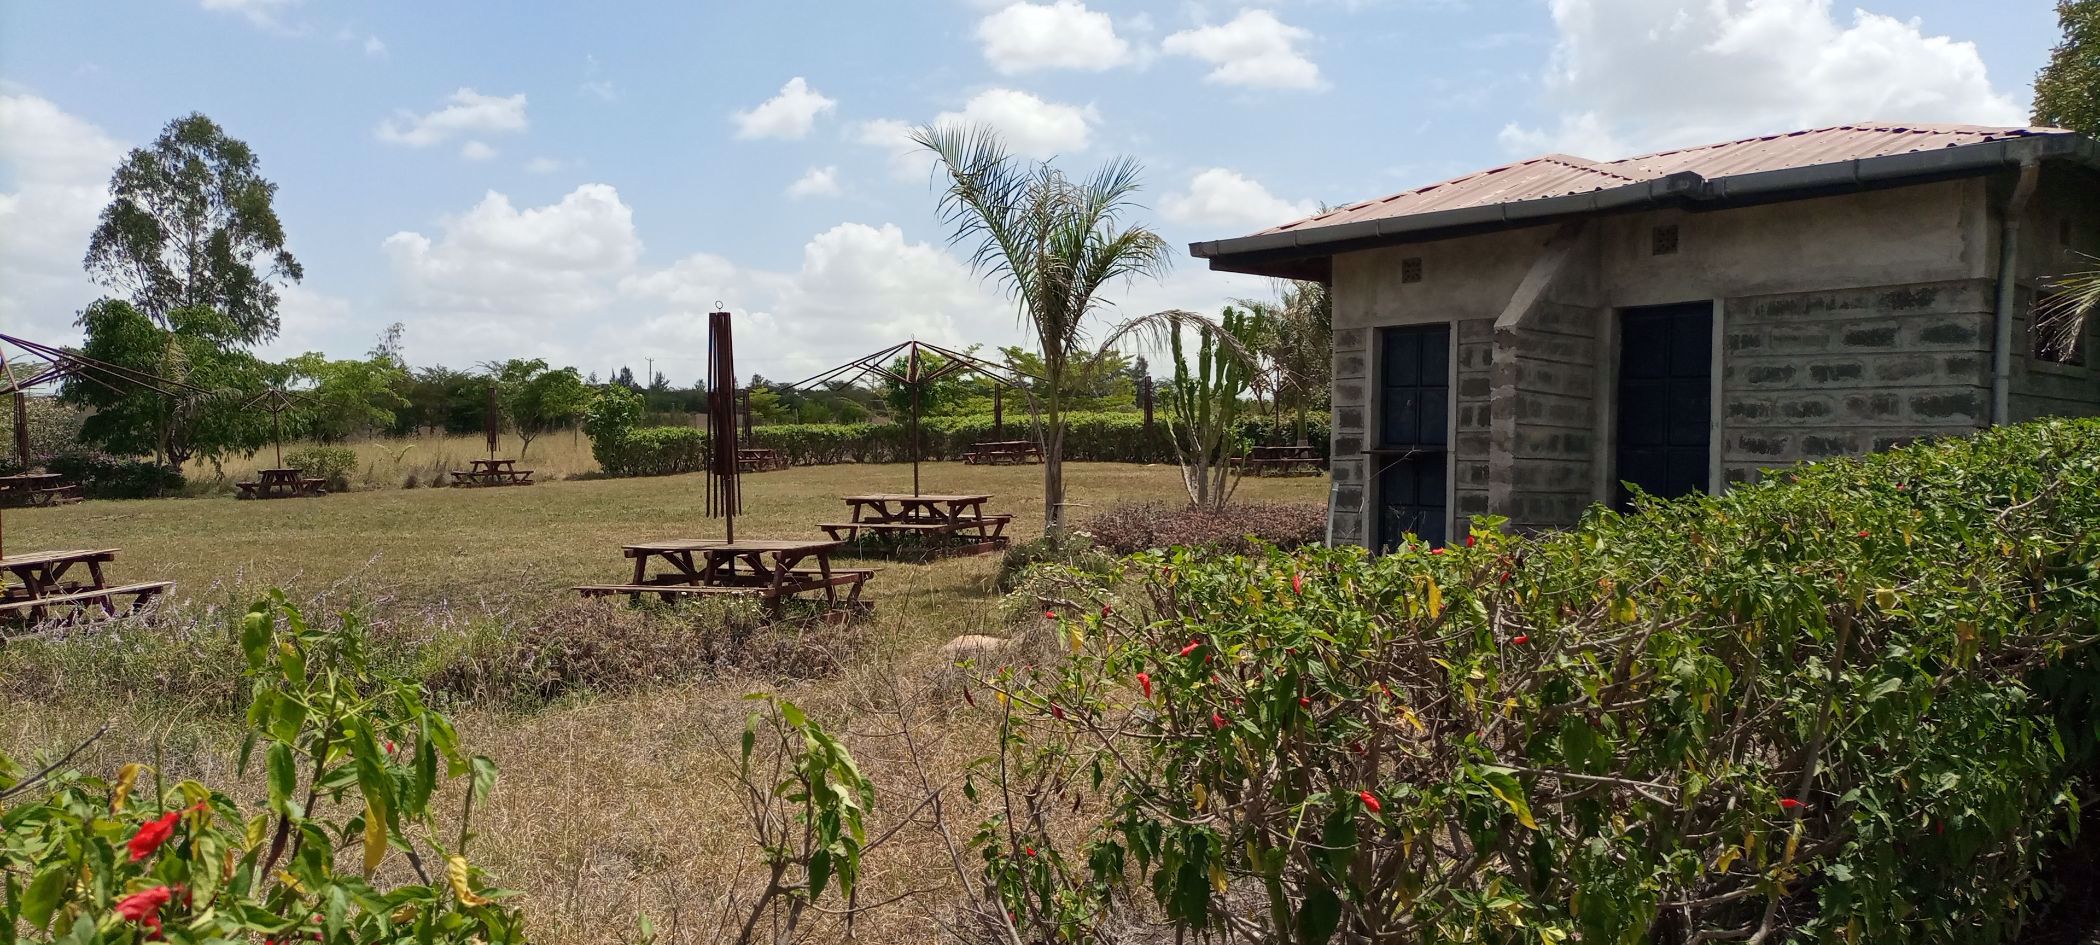 10 acres vacant land for sale in Kitengela (Kenya)